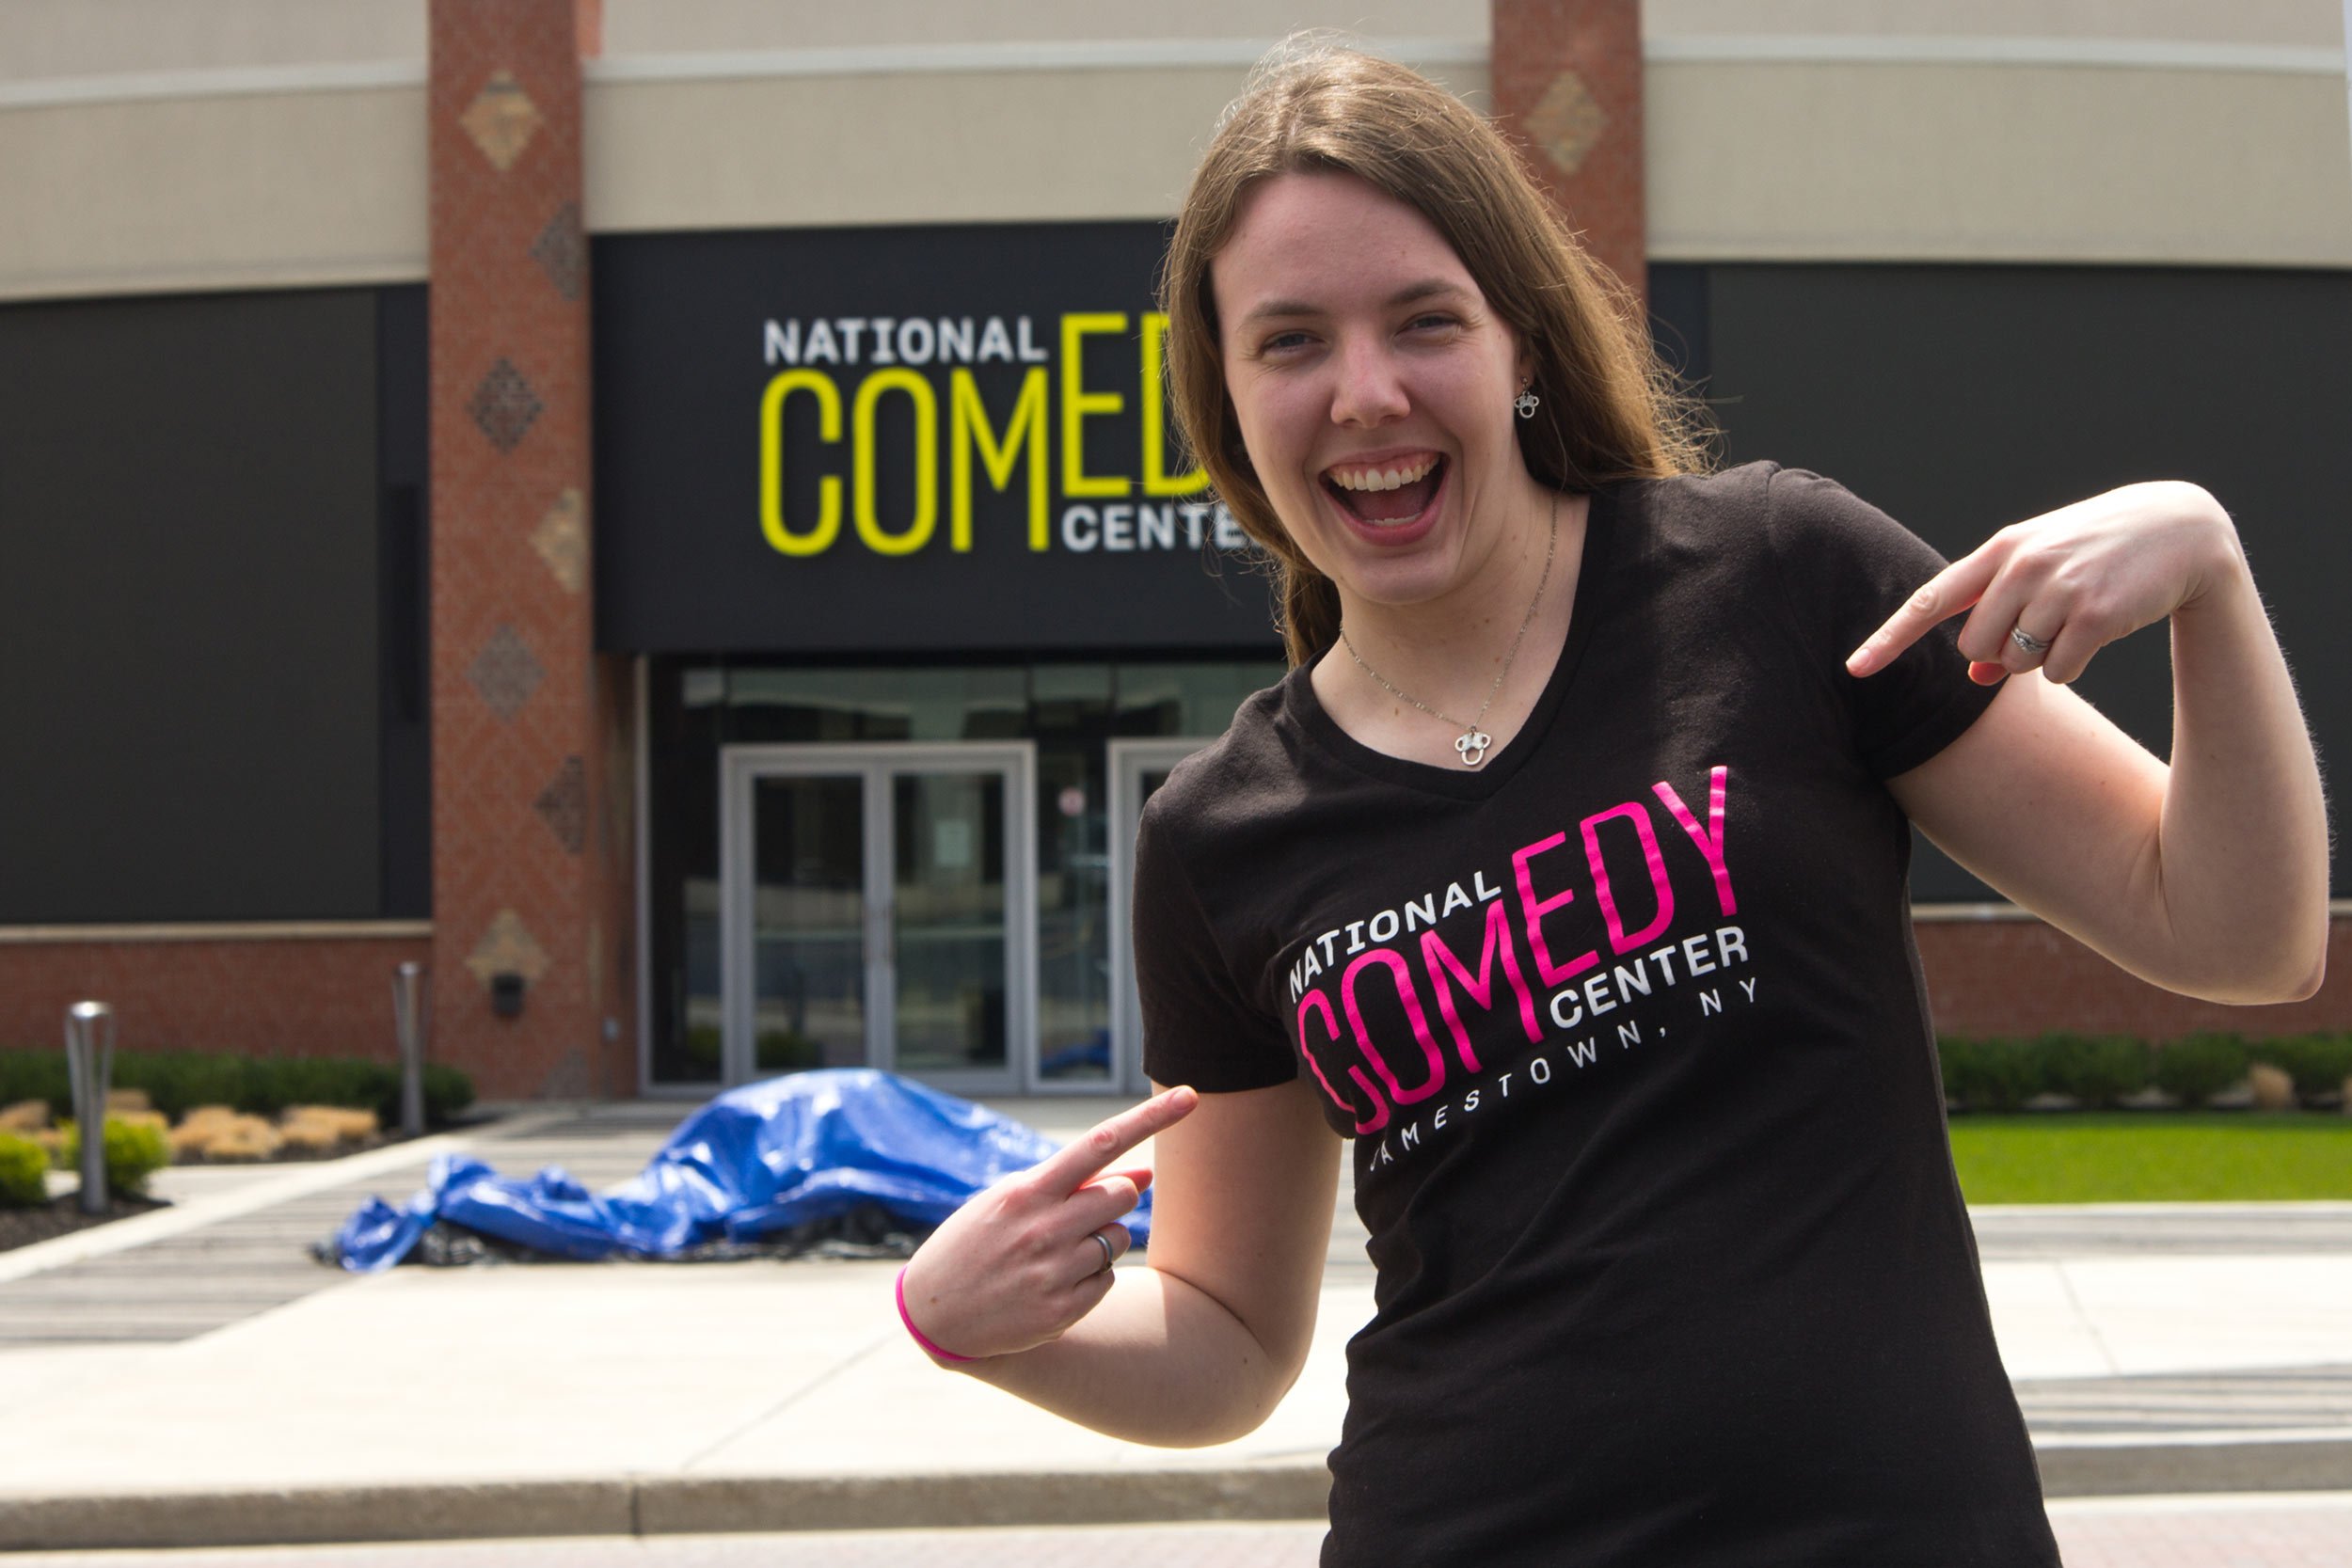 National-comedy-center-jamestown-ny